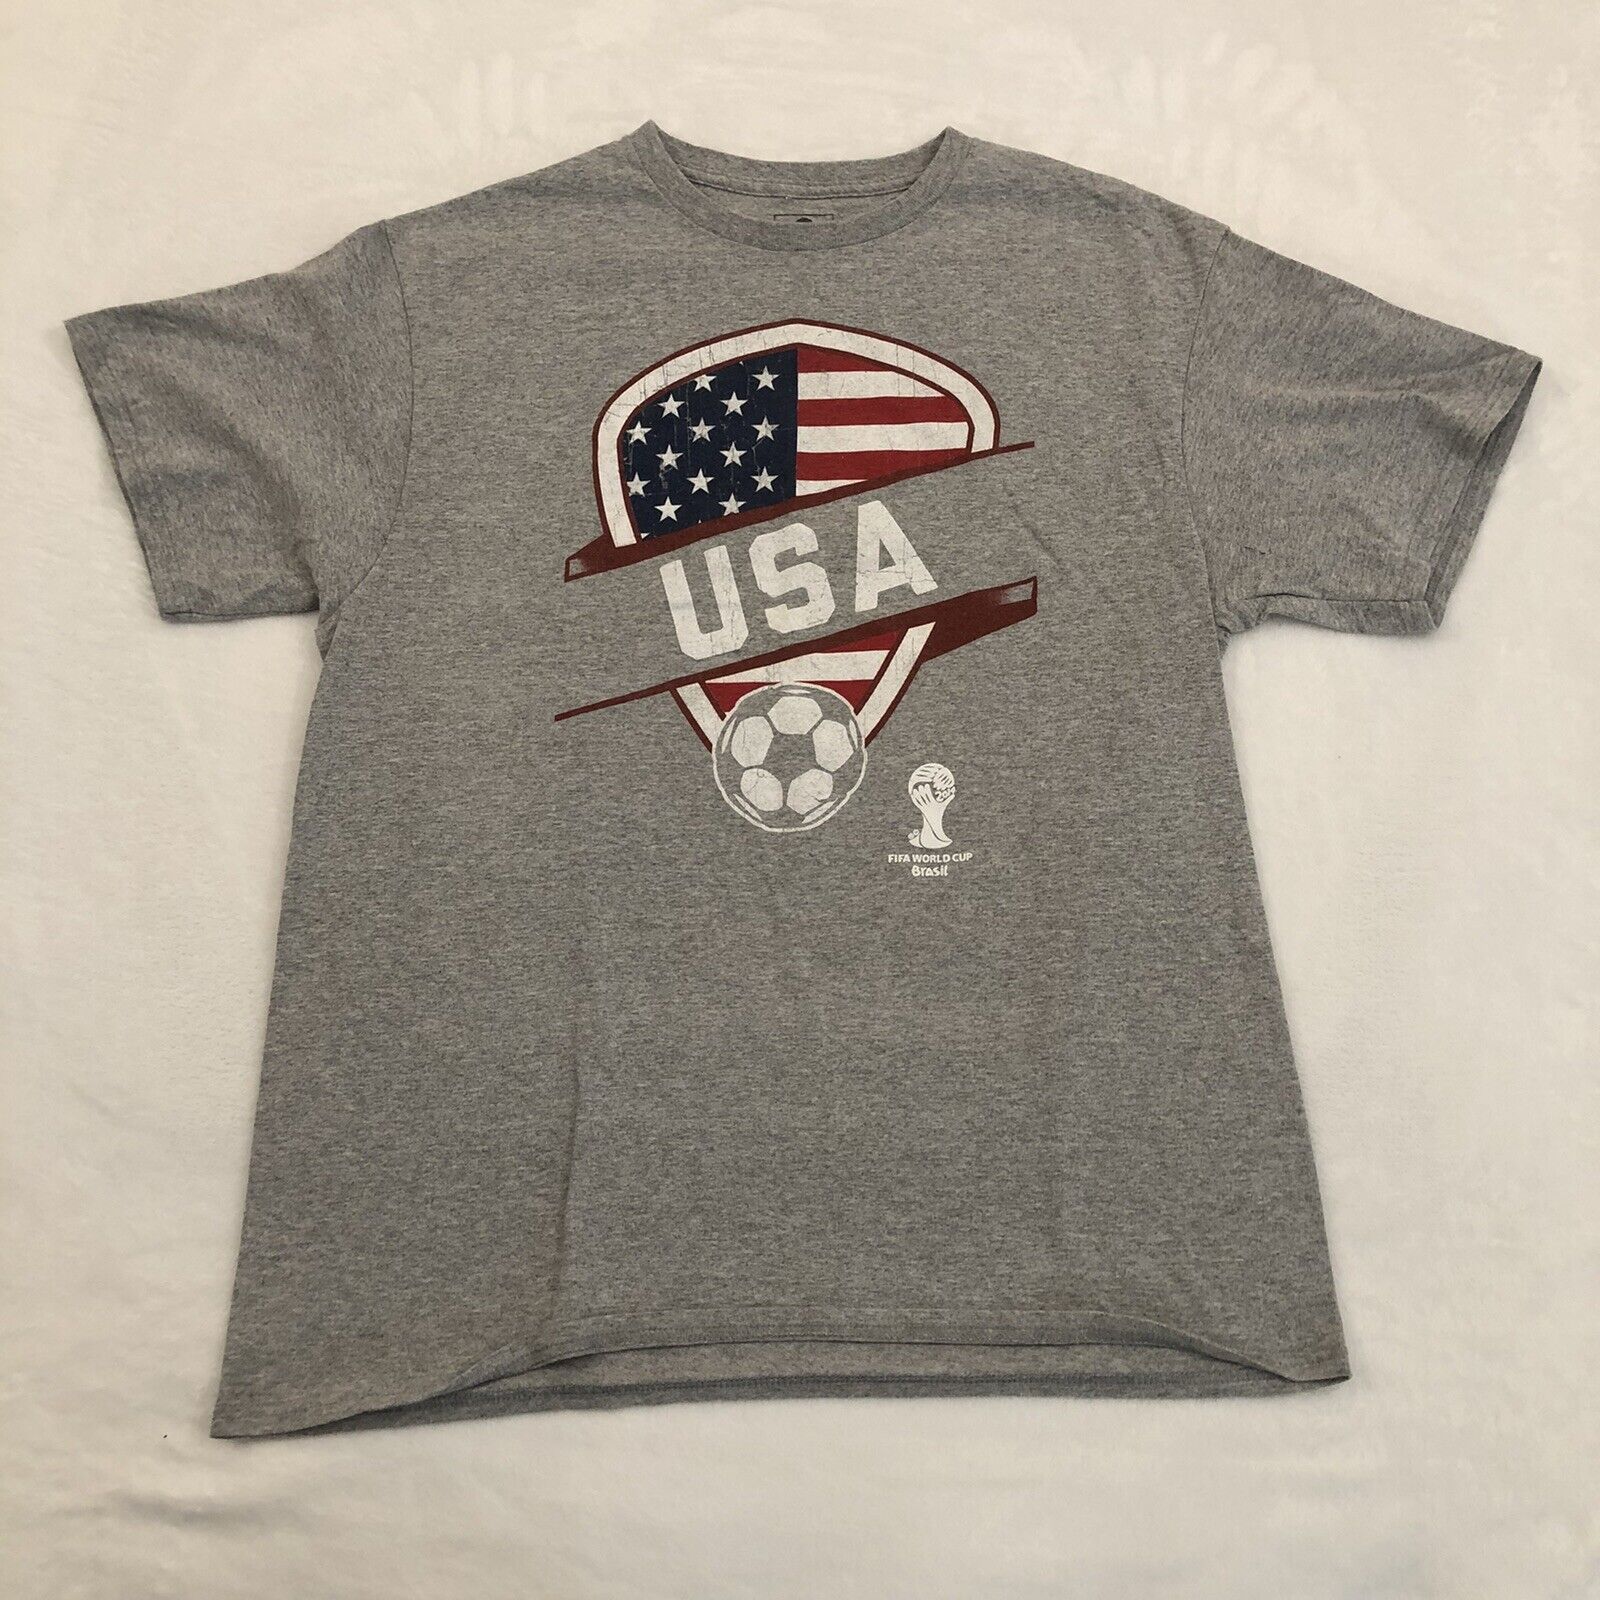 USA Soccer Team FIFA World Cup 2014 Brasil Futbol Gray T-Shirt Men’s size L